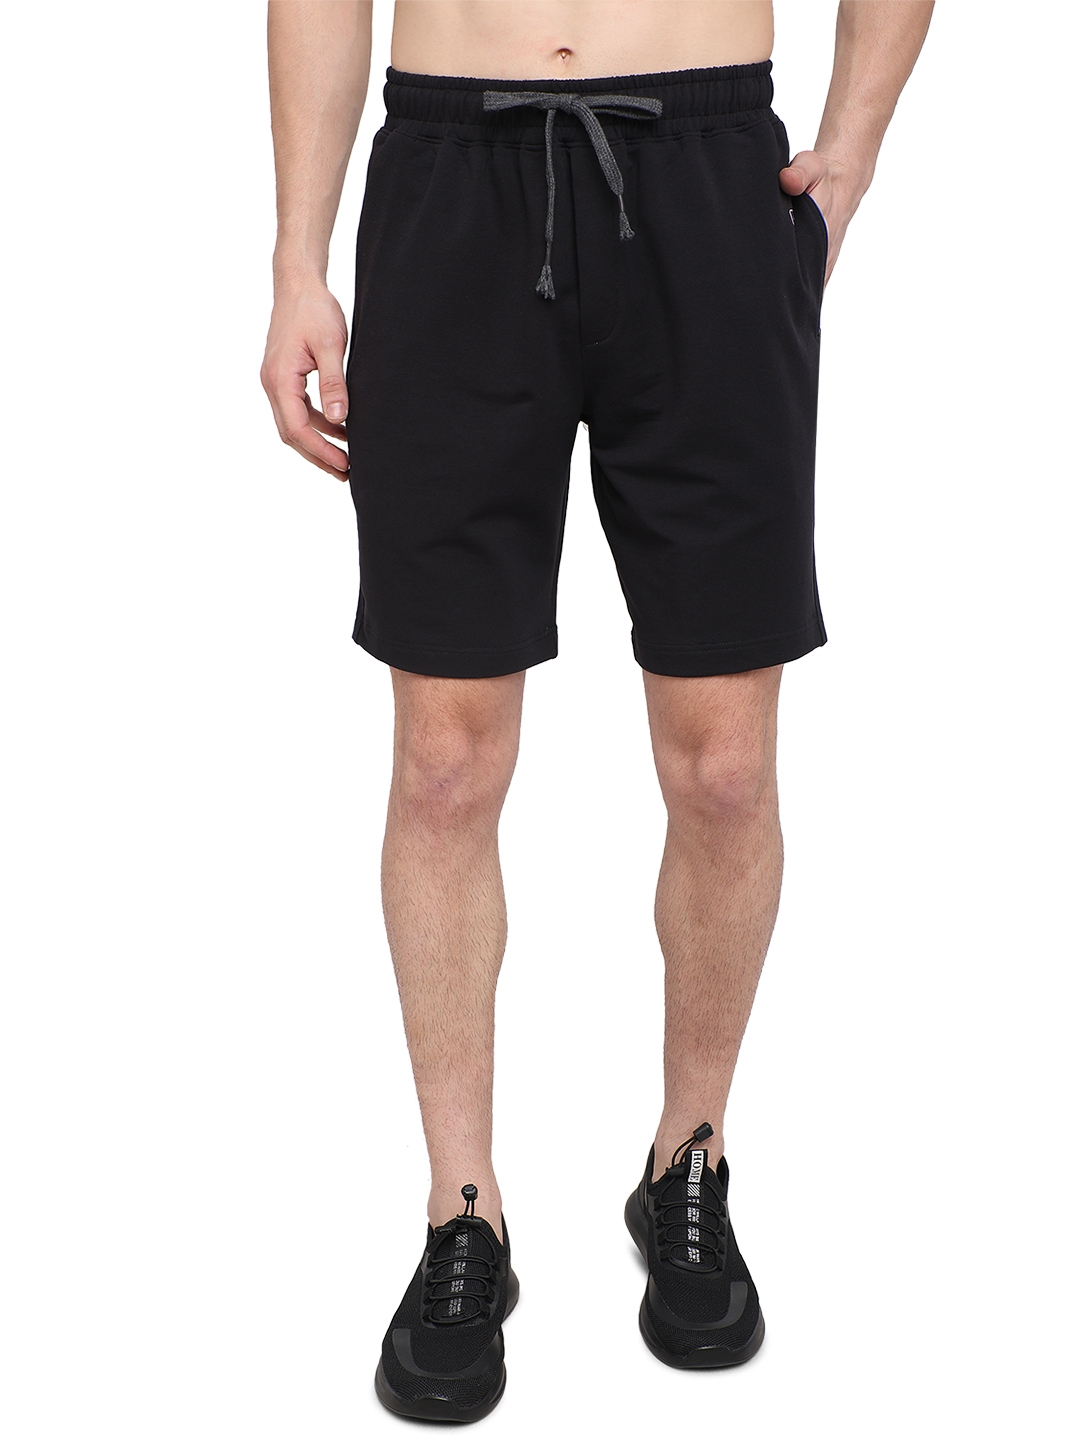 JadeBlue | Black Solid Shorts (JB-SH-029/B BLACK)